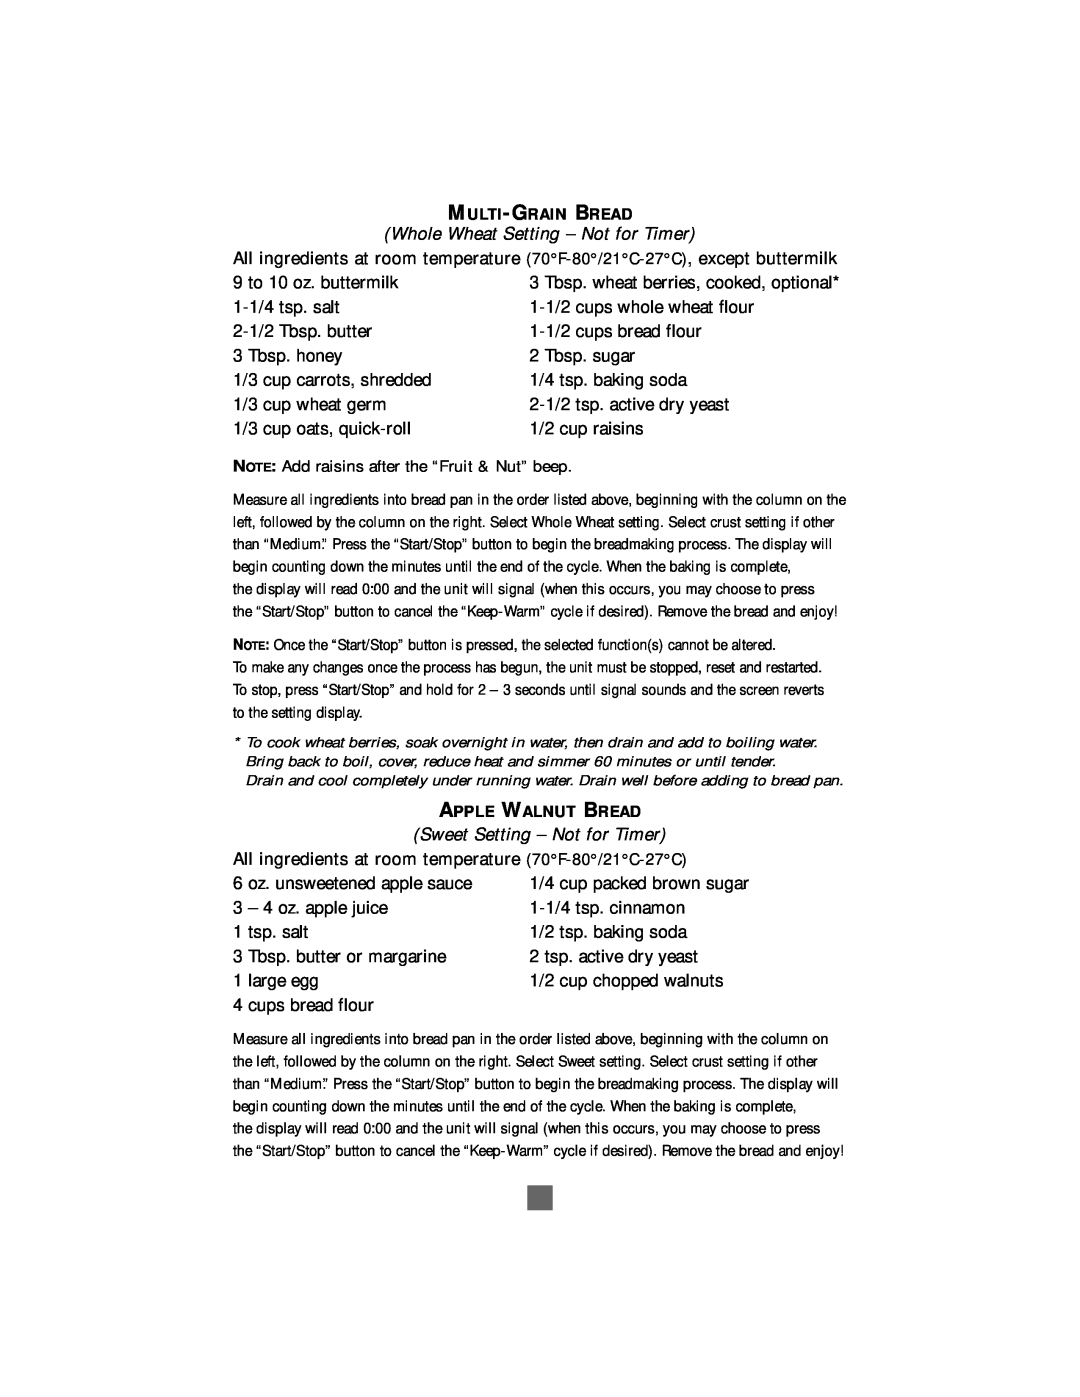 Sunbeam Bread/Dough Maker manual Whole Wheat Setting - Not for Timer, Multi-Grain Bread 